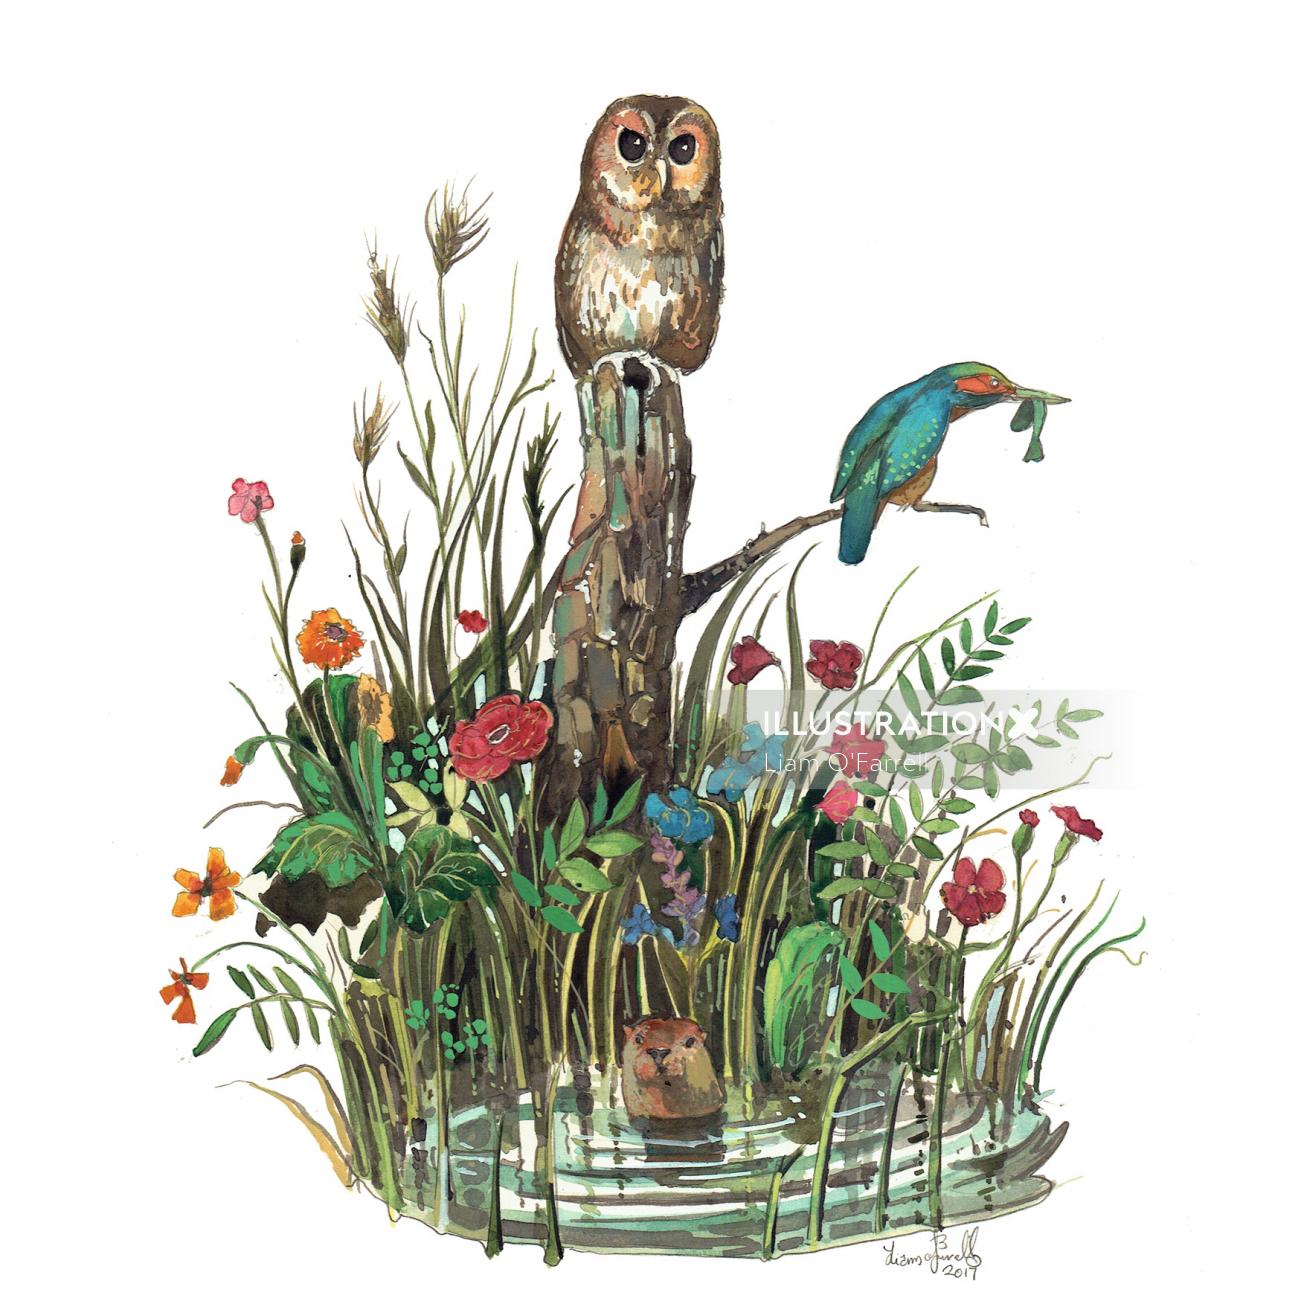 An illustration showing bird and animals around a pond